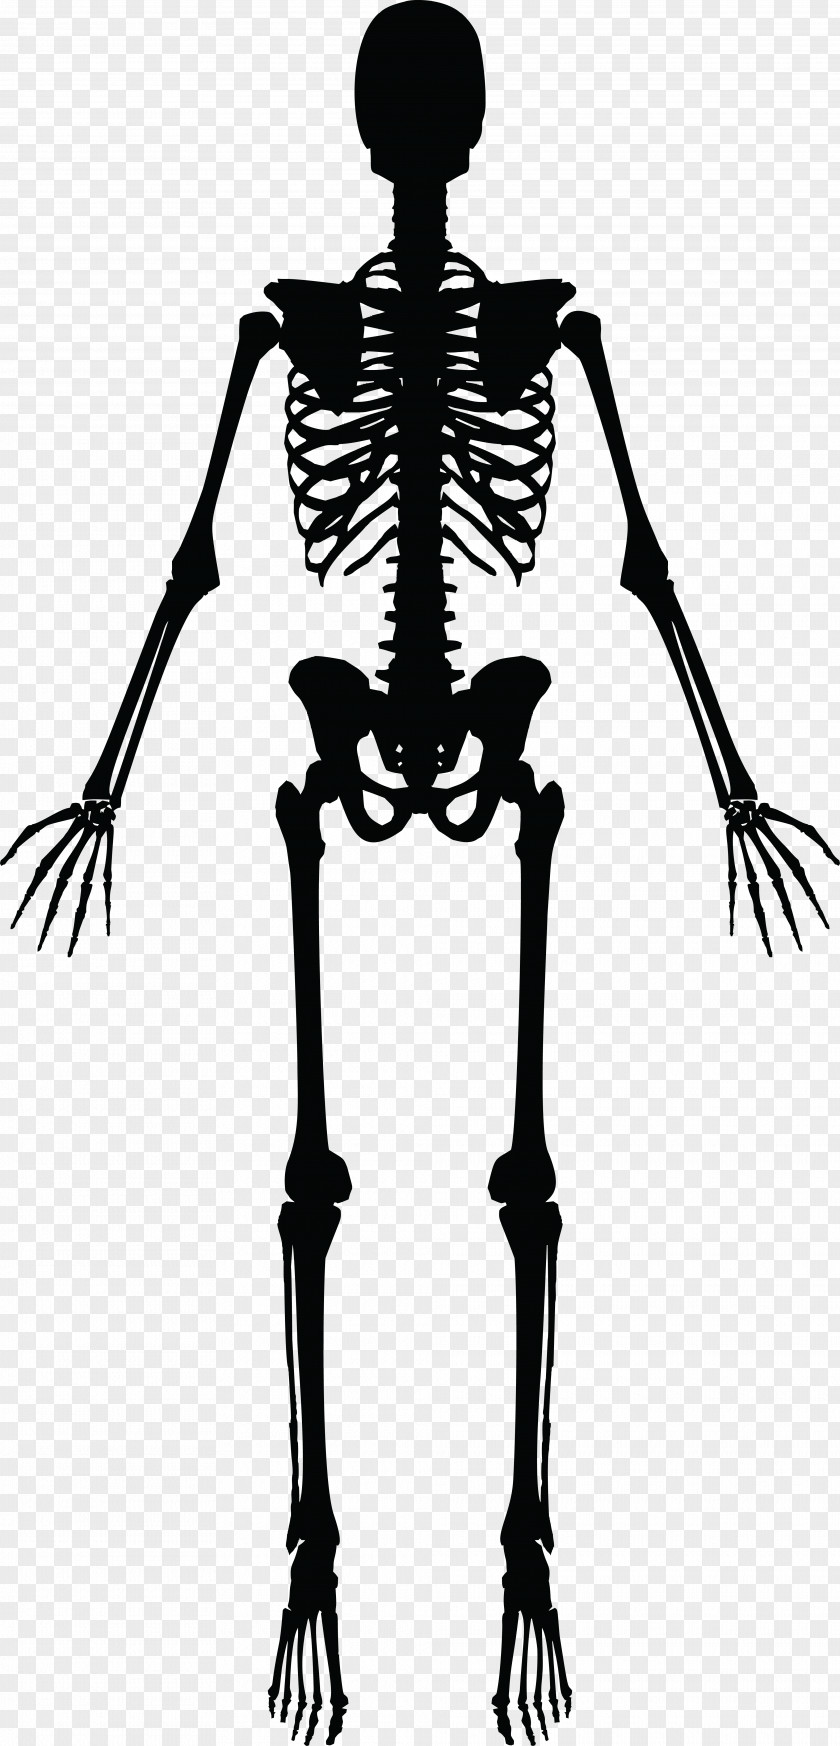 Skeleton Human Silhouette Clip Art PNG